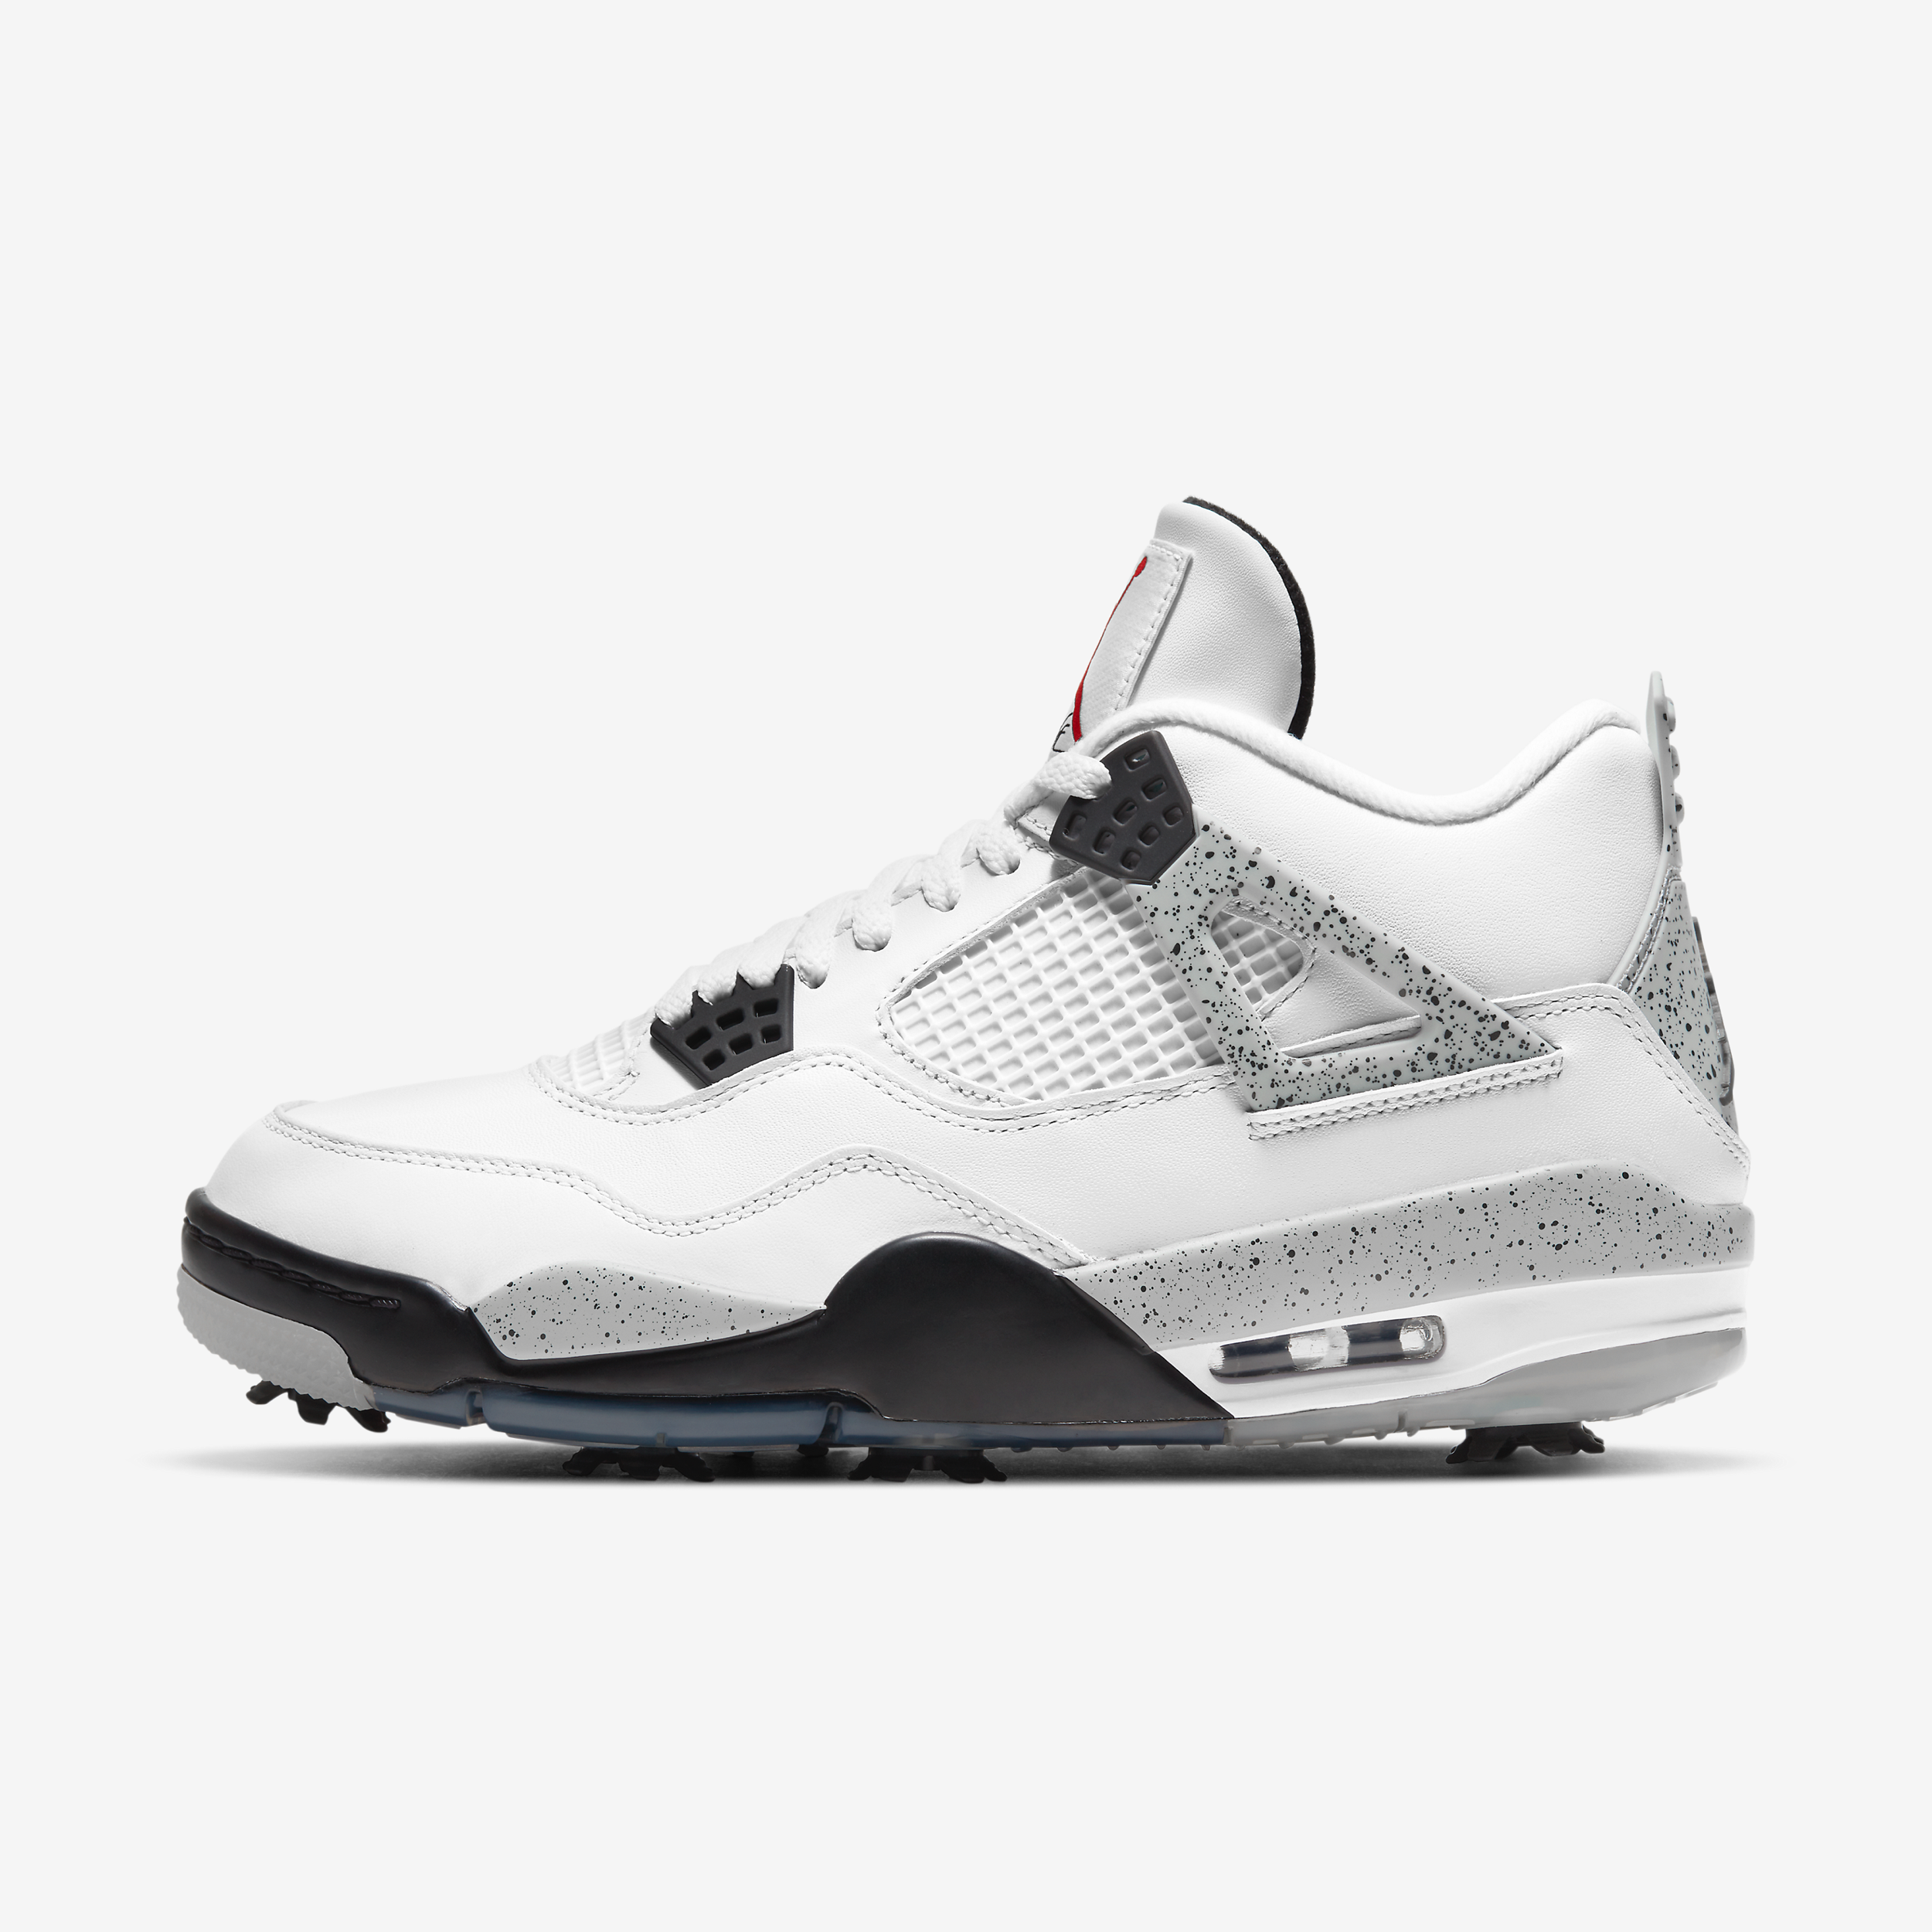 Sneaker Drop — Air Jordan 4 Golf ‘White Cement’